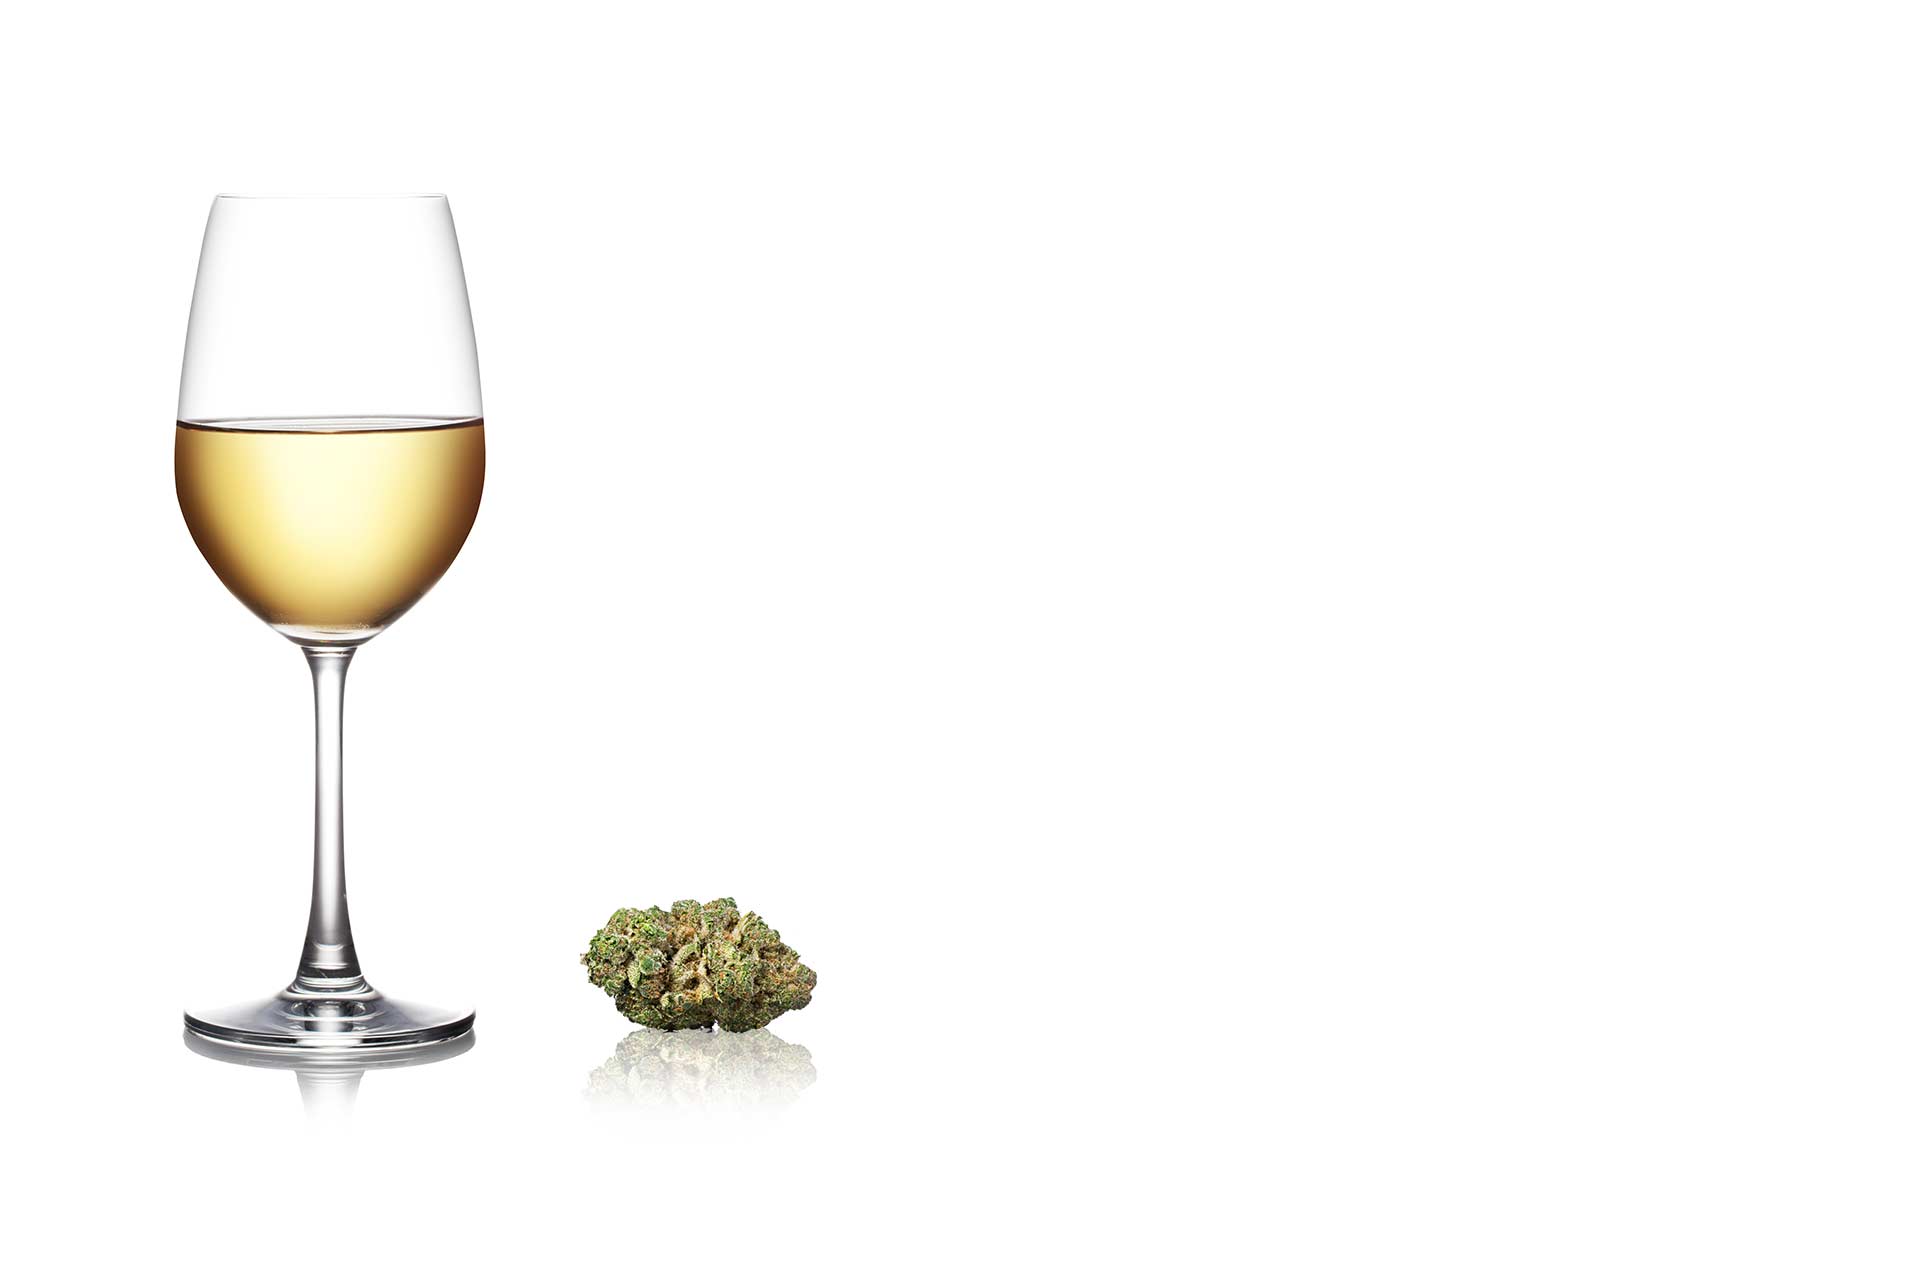 Wine vs. Cannabis